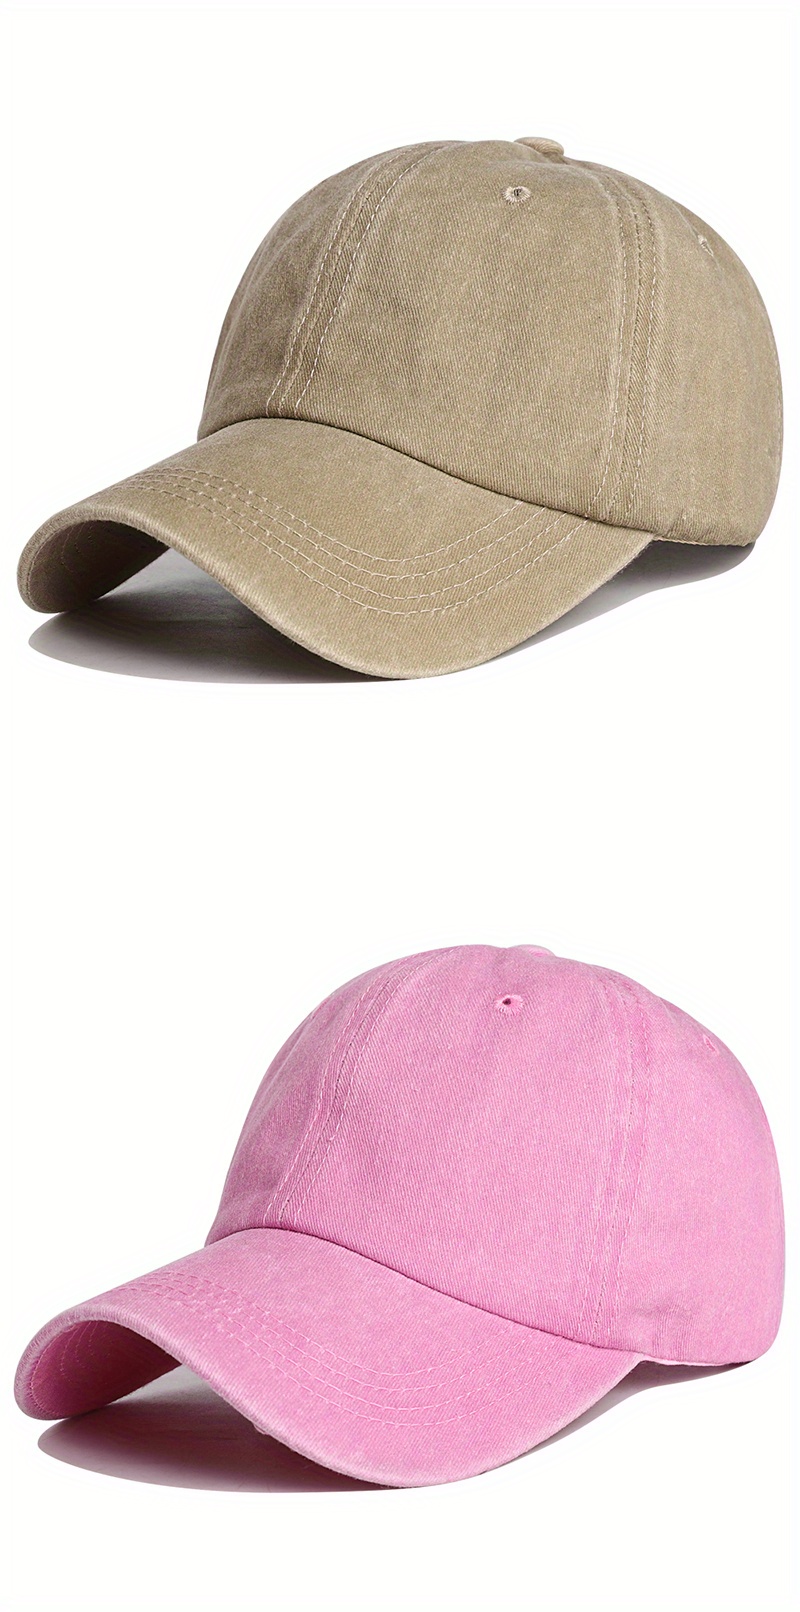 Adjustable Cotton Denim Baseball Cap For Men And Women Solid Color